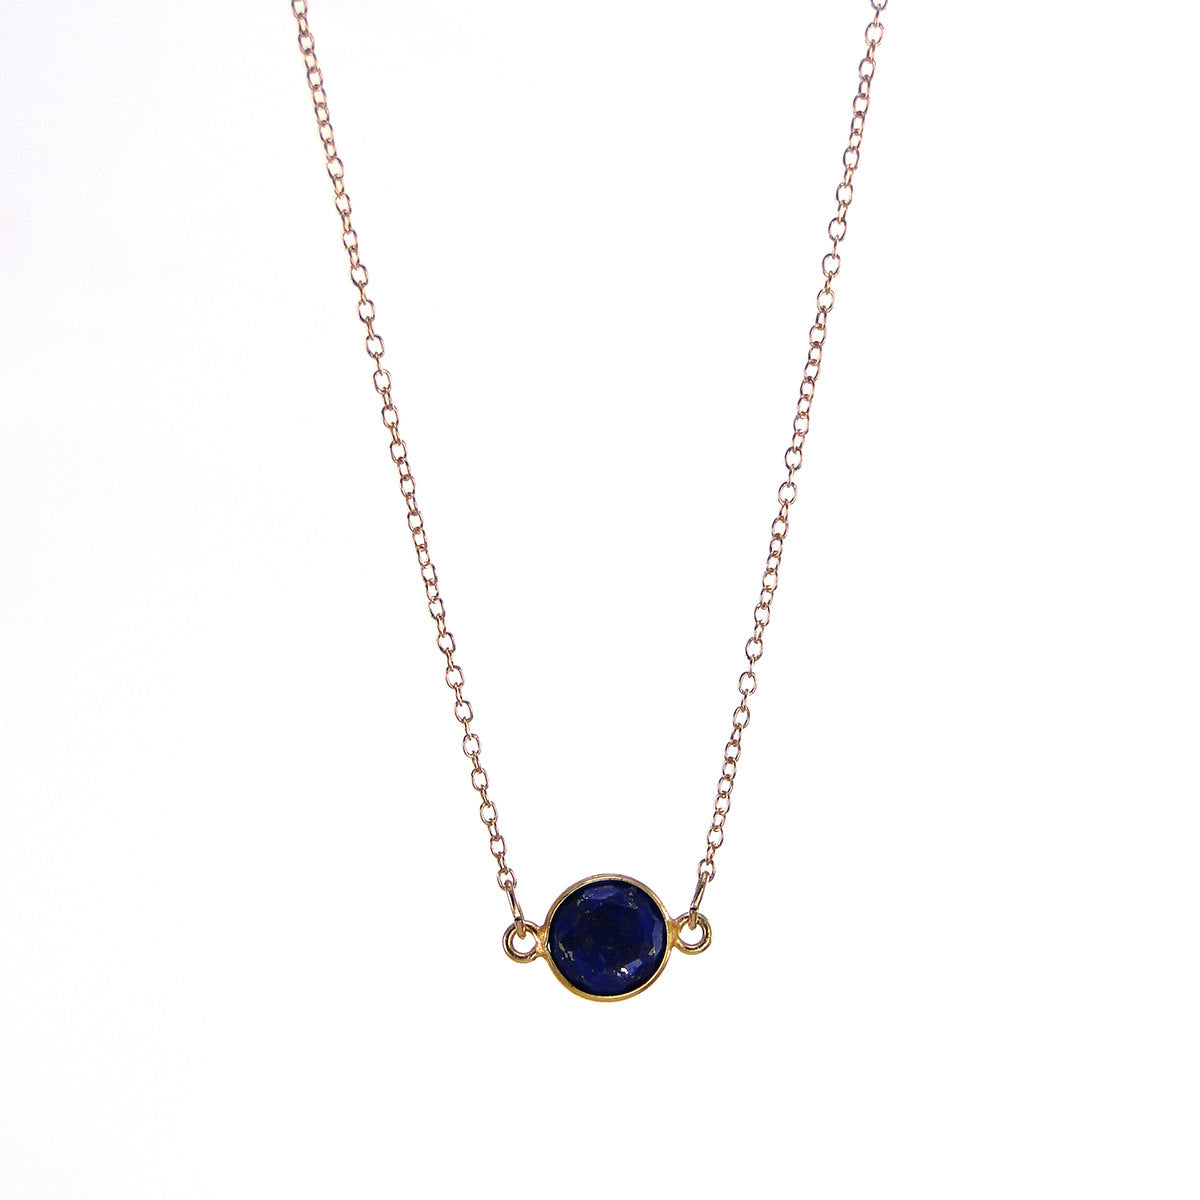 Blue Swarovski crystal drop pendant necklace for women - JoyElly